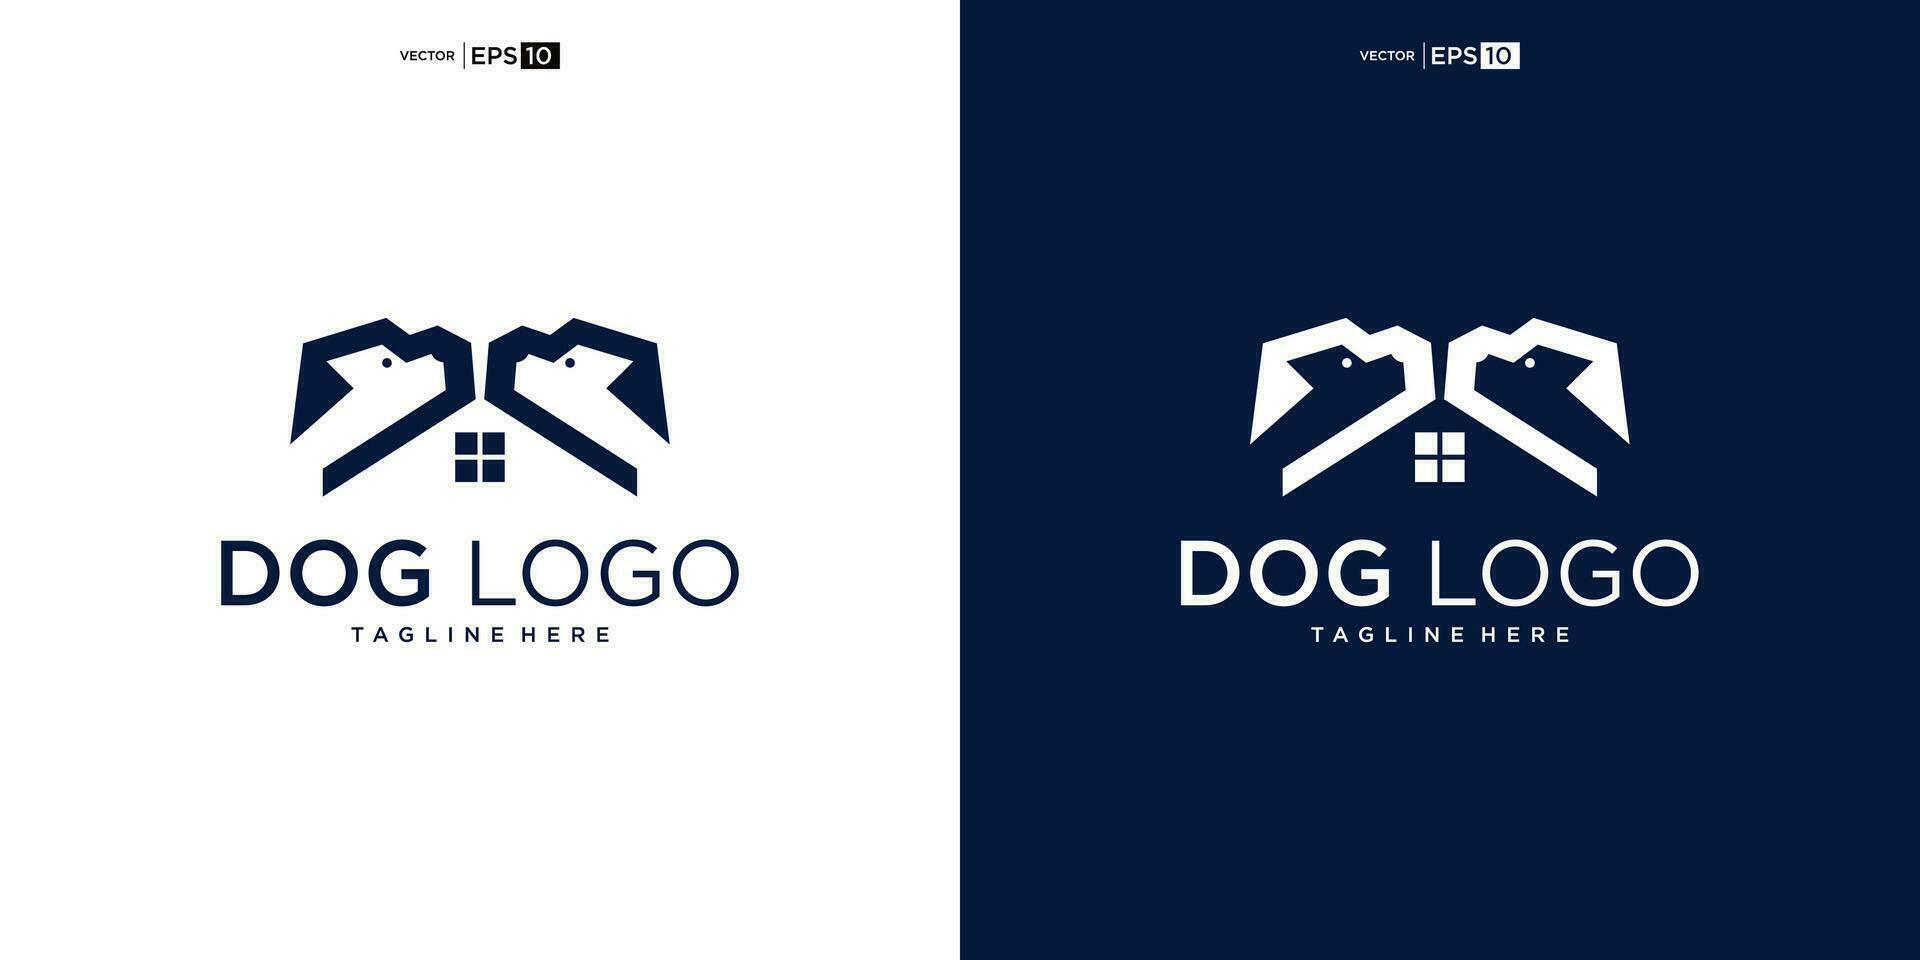 House dog logo design inspiration vector